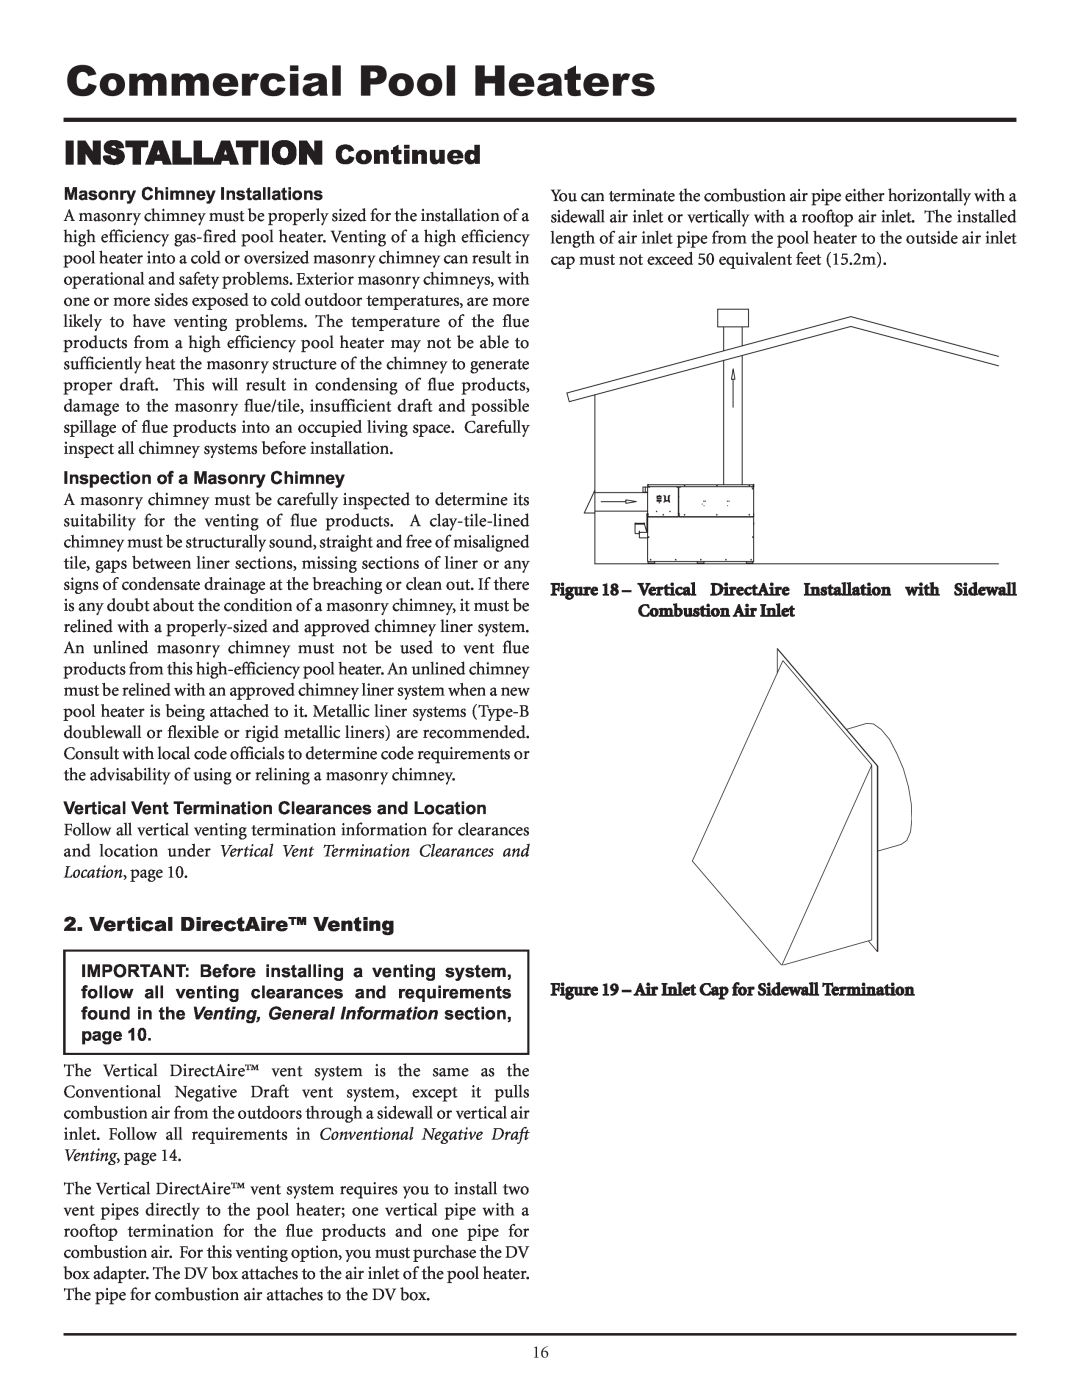 Lochinvar F0600187510 Vertical DirectAire Venting, Masonry Chimney Installations, Inspection of a Masonry Chimney 